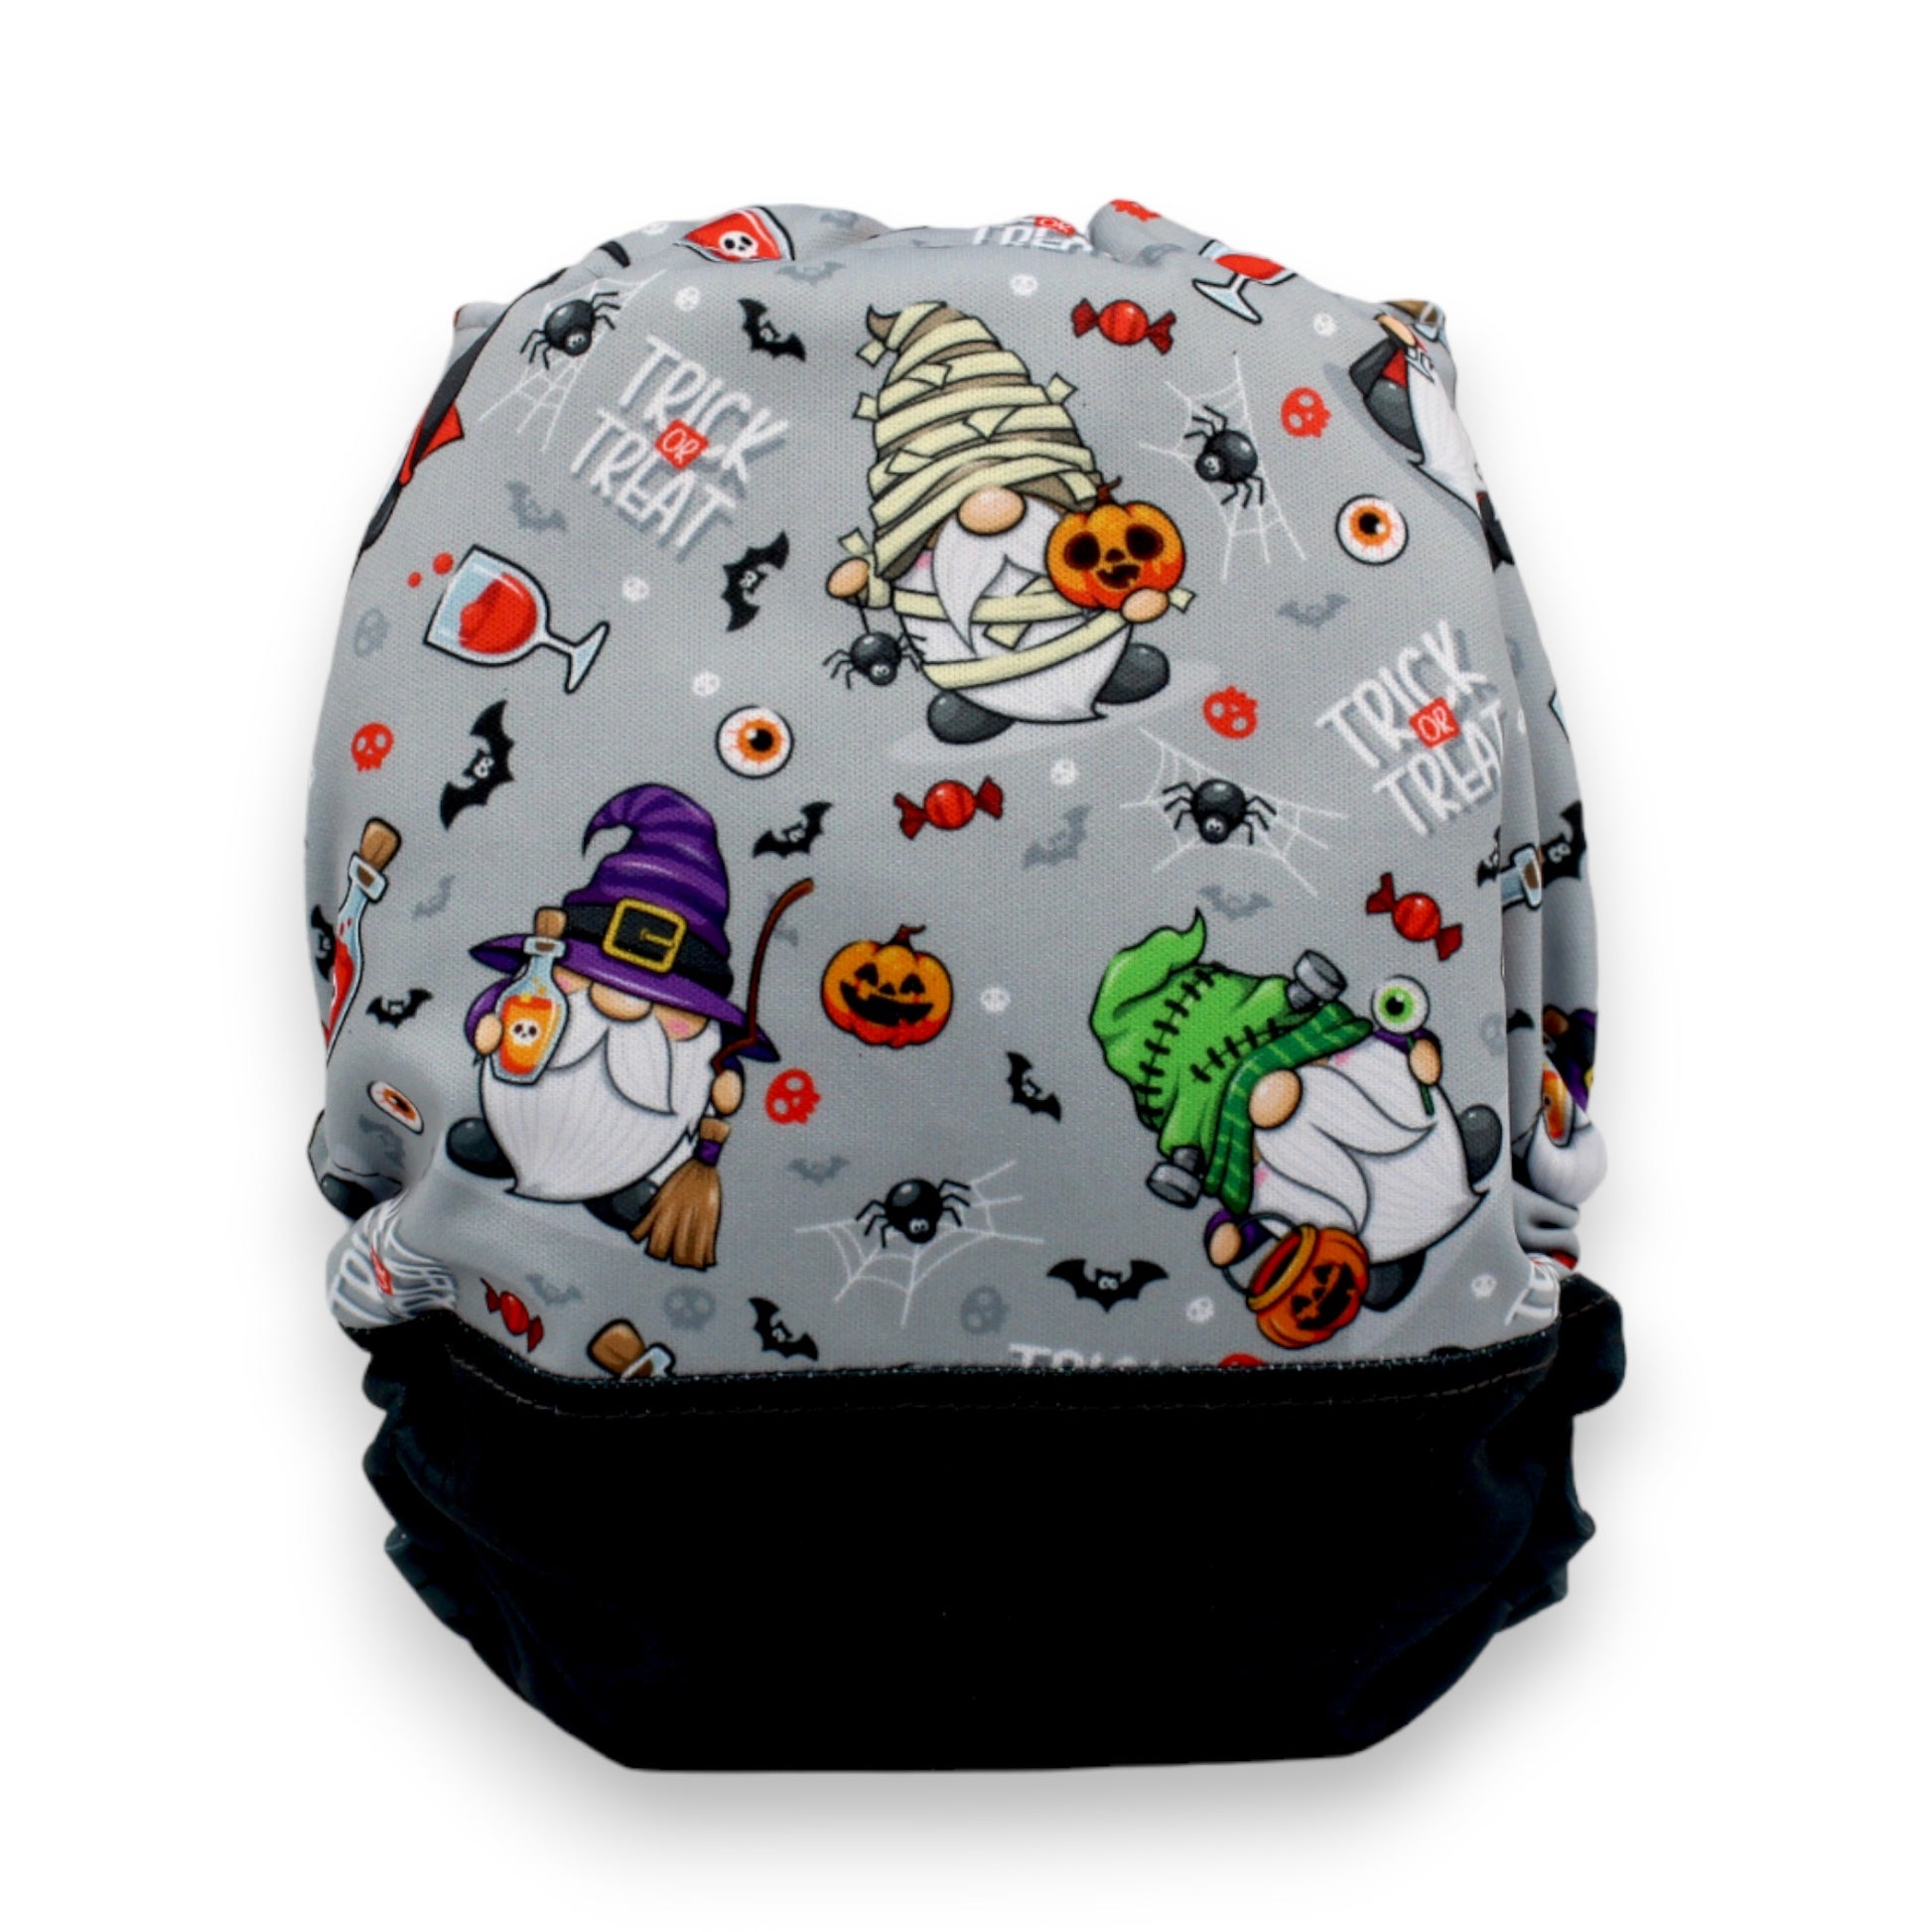 Couches - Halloween chez les Gnomes (7249851318409)